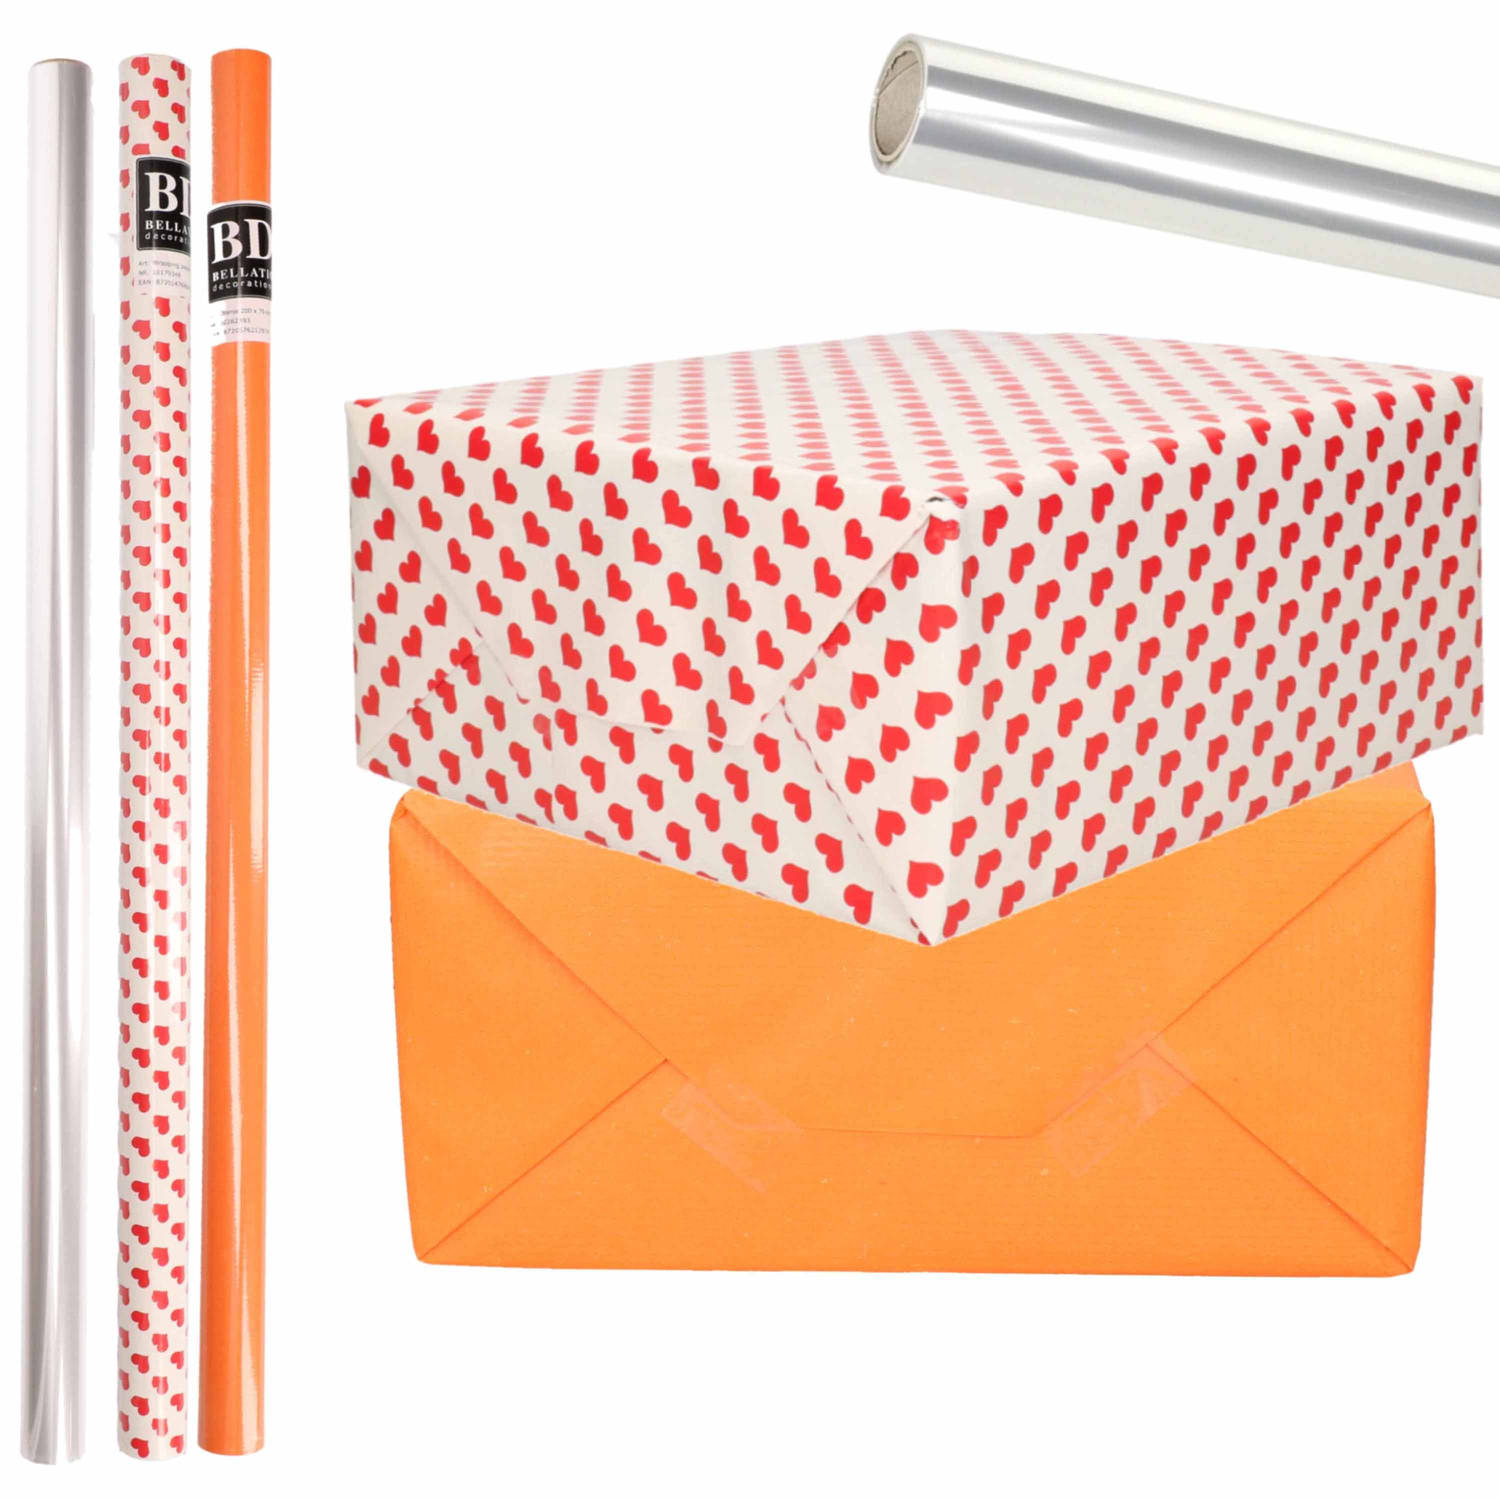 restjes Trots letterlijk 6x Rollen kraft inpakpapier transparante folie/hartjes pakket -  oranje/harten design 200 x 70 cm - Cadeaupapier | Blokker